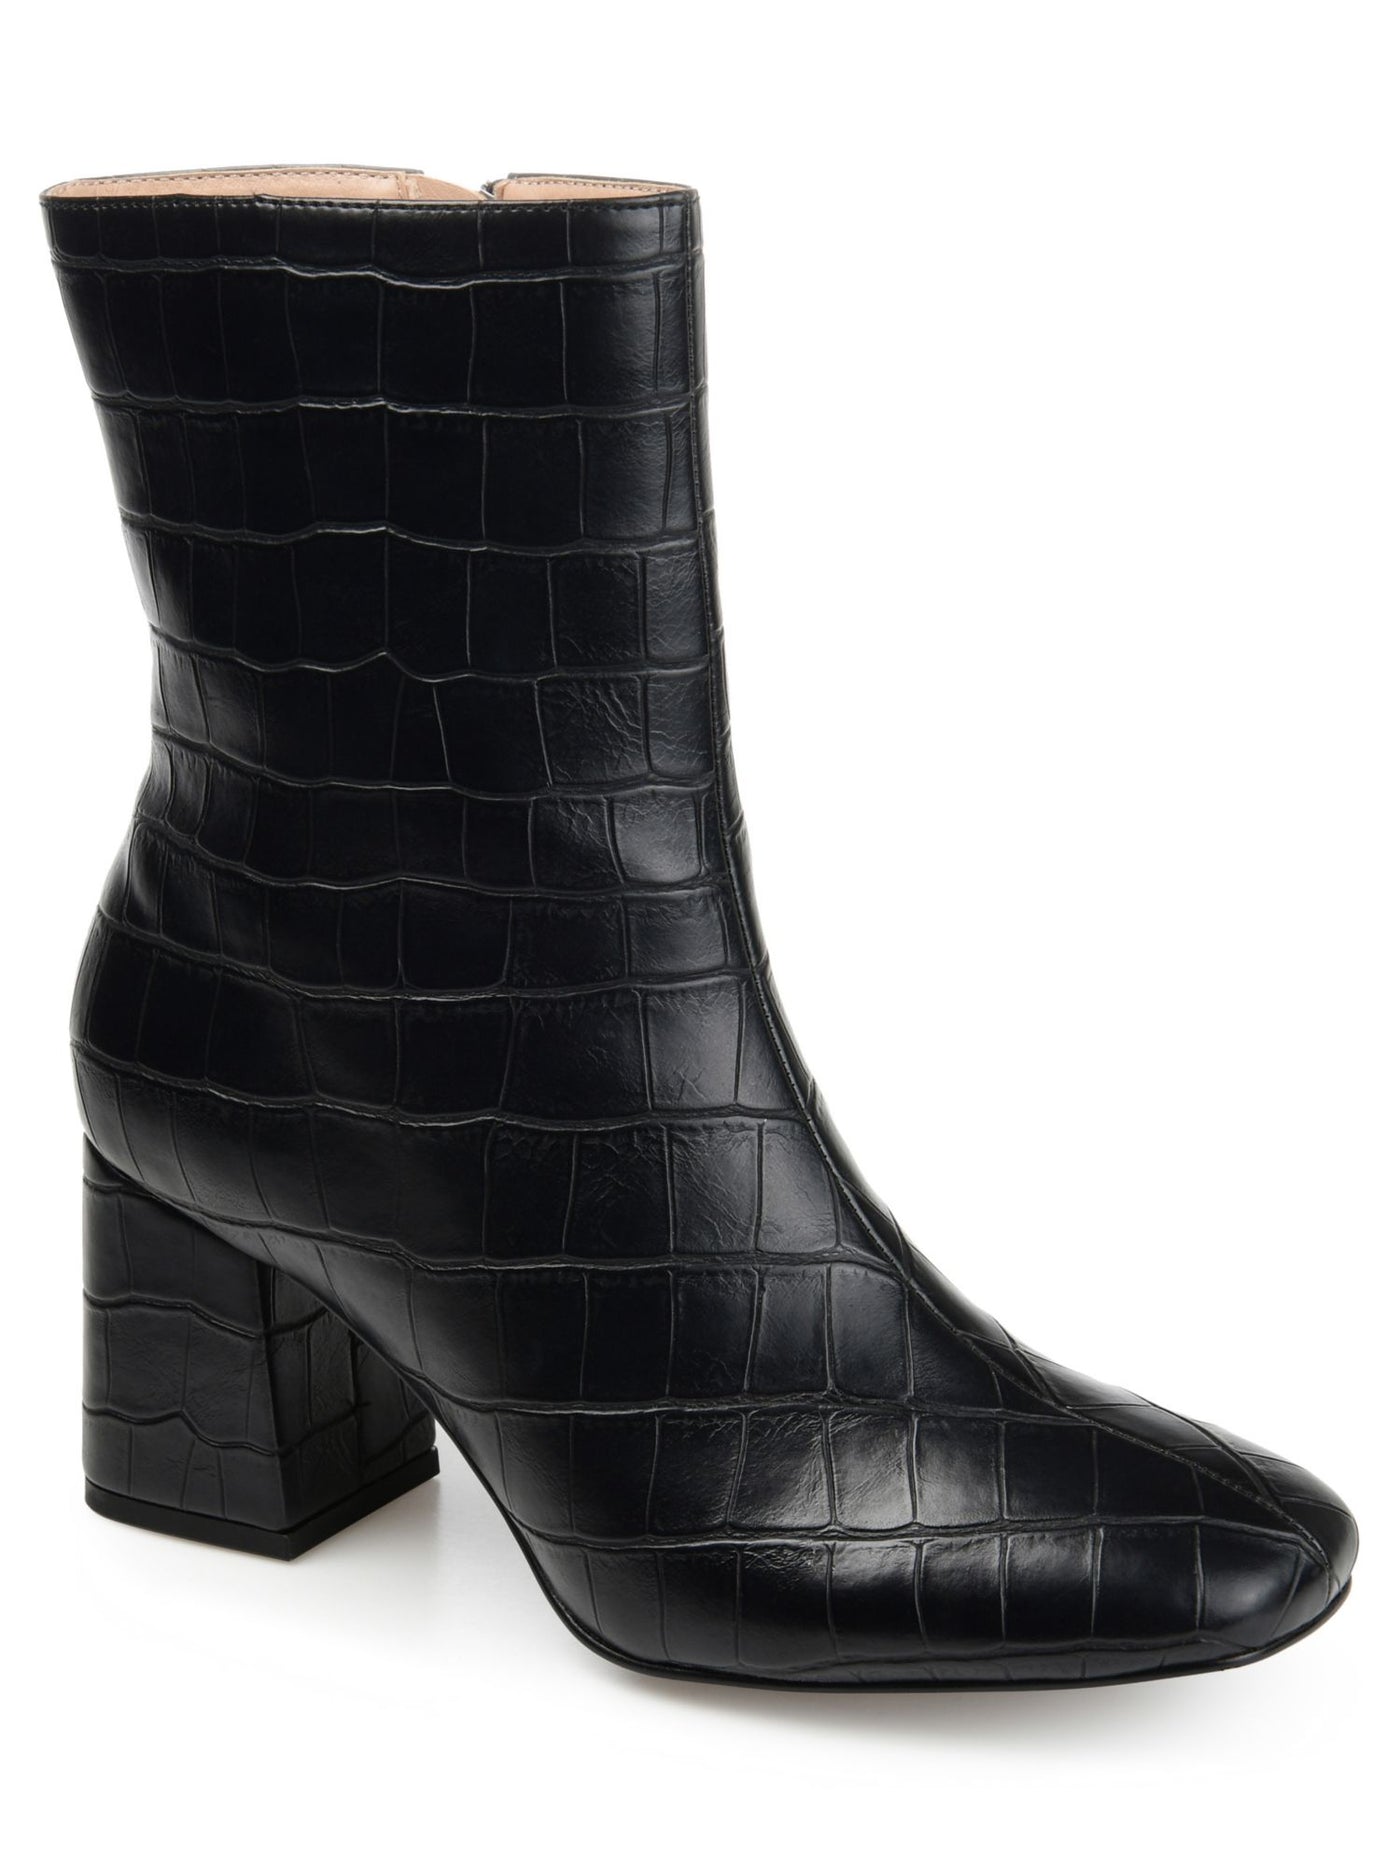 JOURNEE COLLECTION Womens Black Crocodile Padded Trevi Square Toe Block Heel Zip-Up Dress Booties 11 M